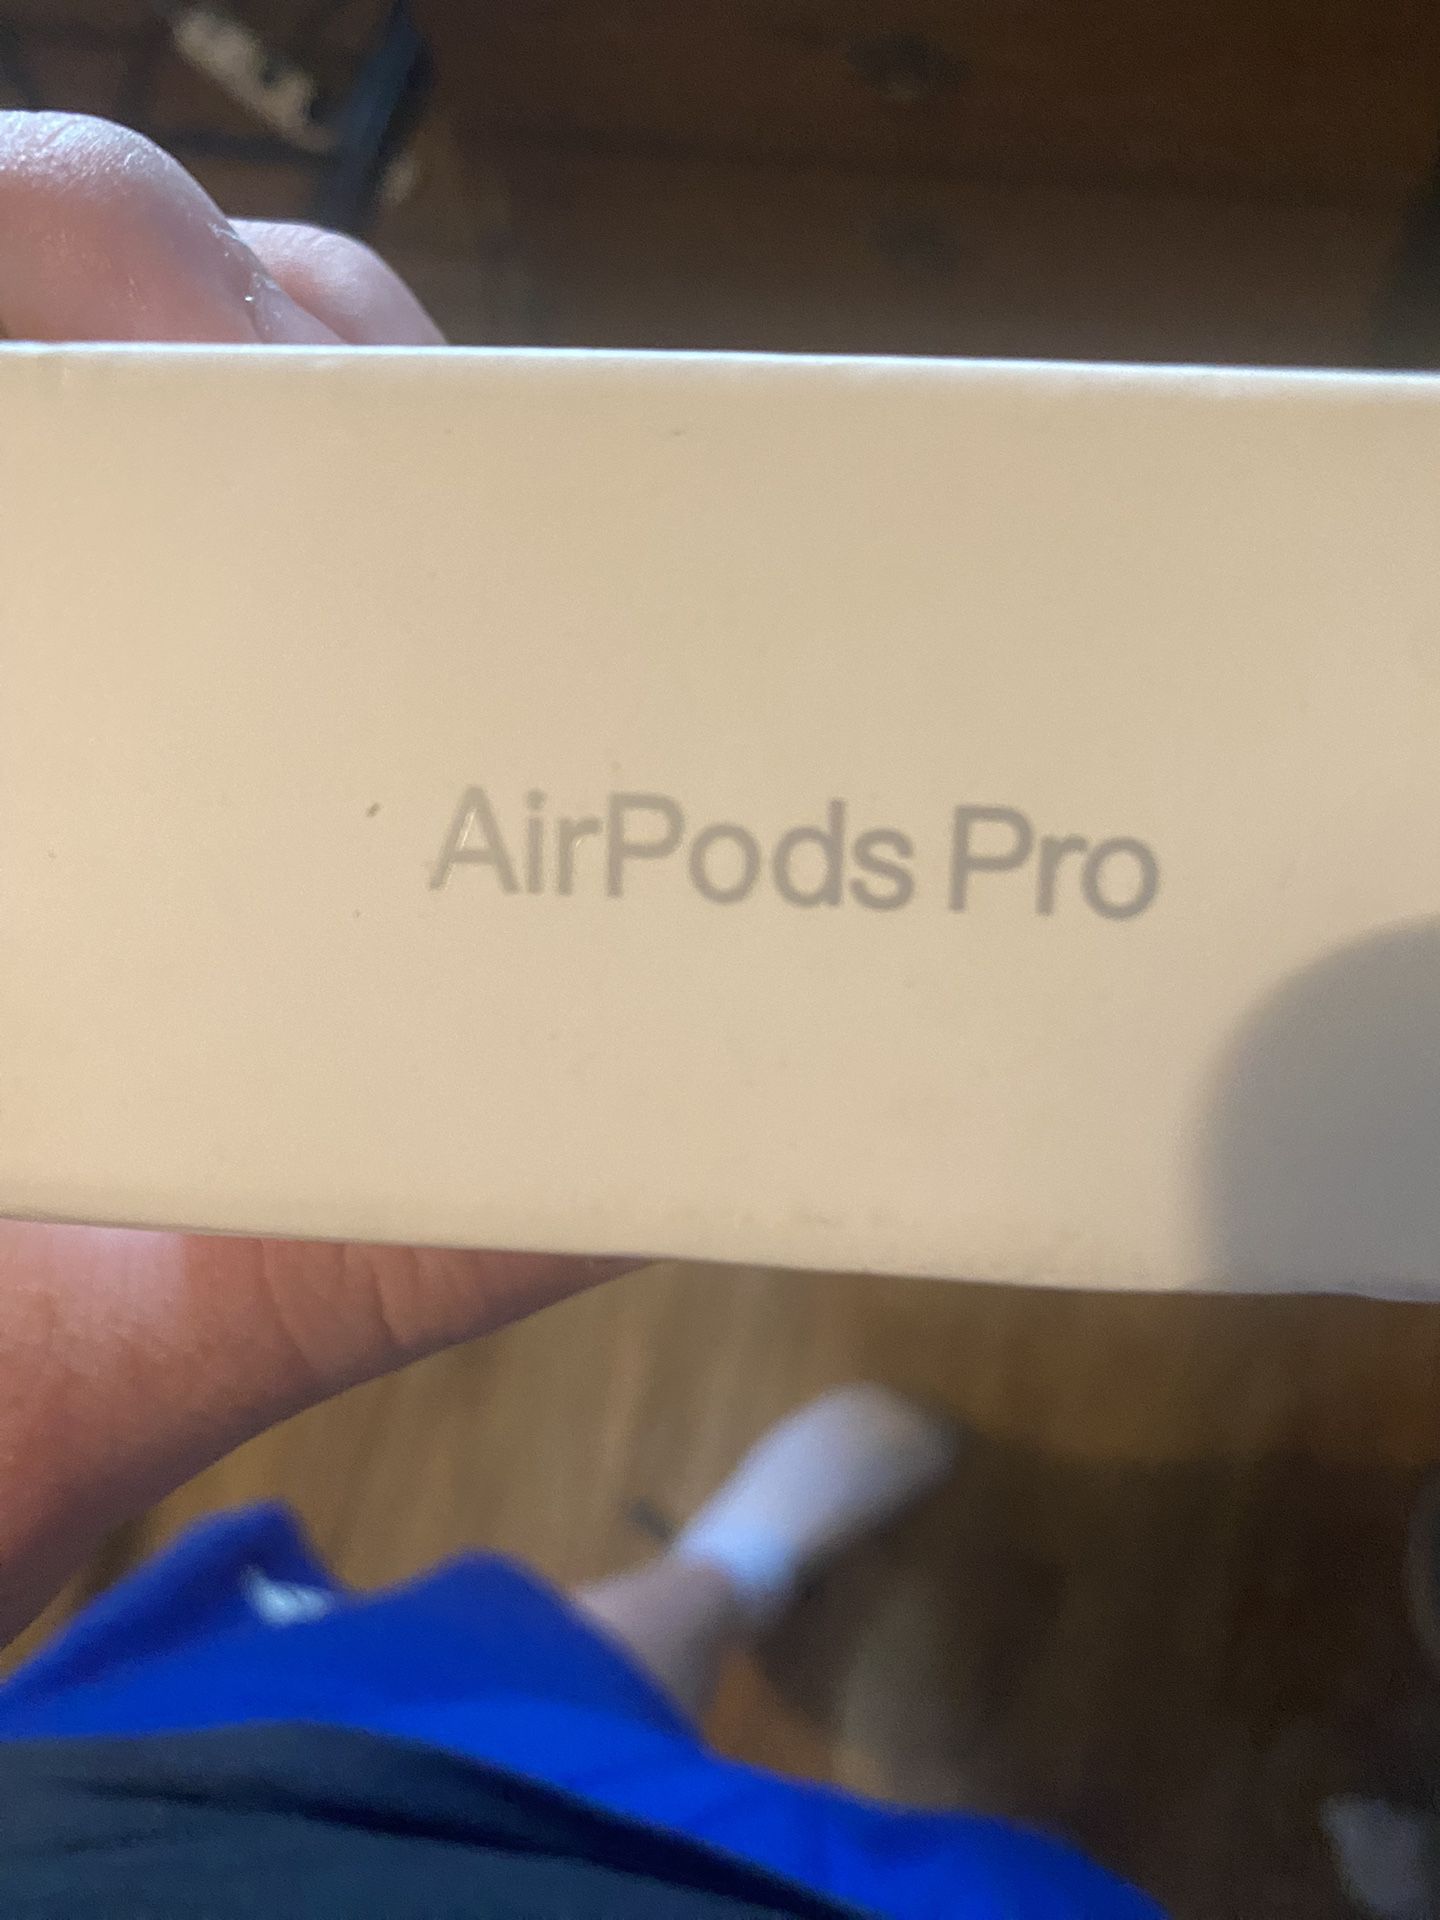 AirPod Pros 